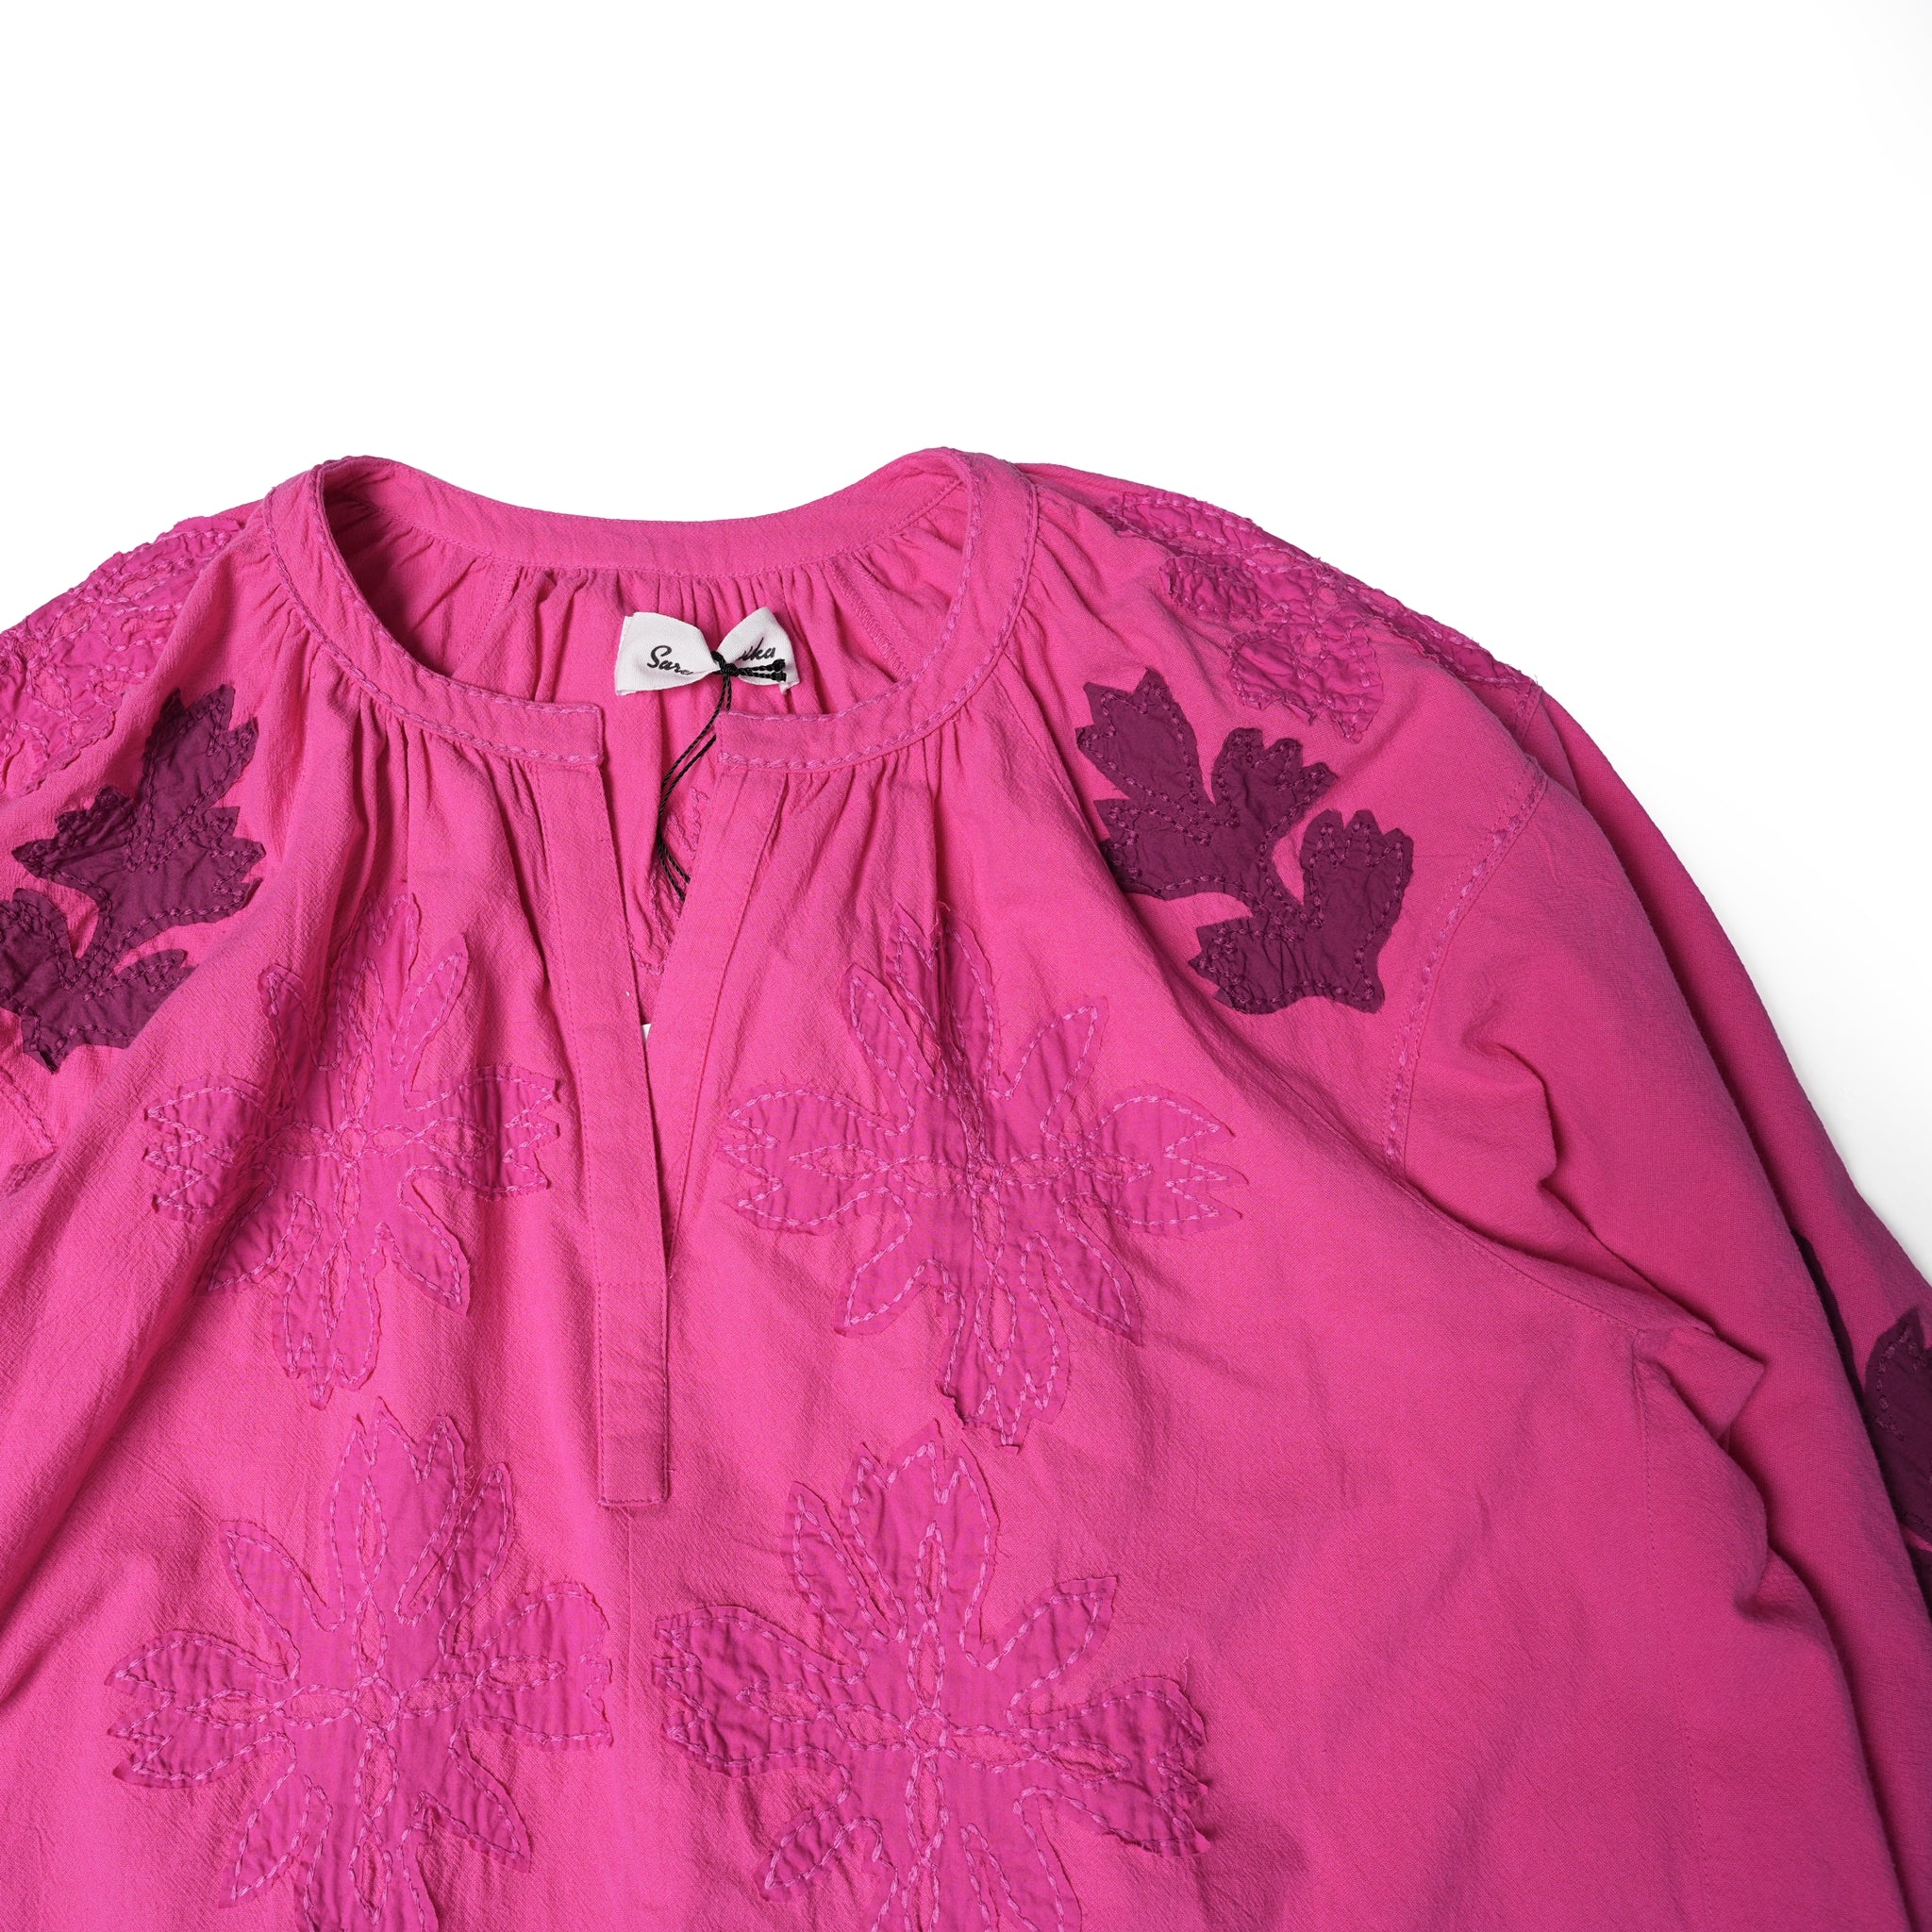 No:020432SA1a | Name:COTTON FLOWER PATCHWORK DRESS |  Color:Pink【SARAMALLIKA_サラマリカ】